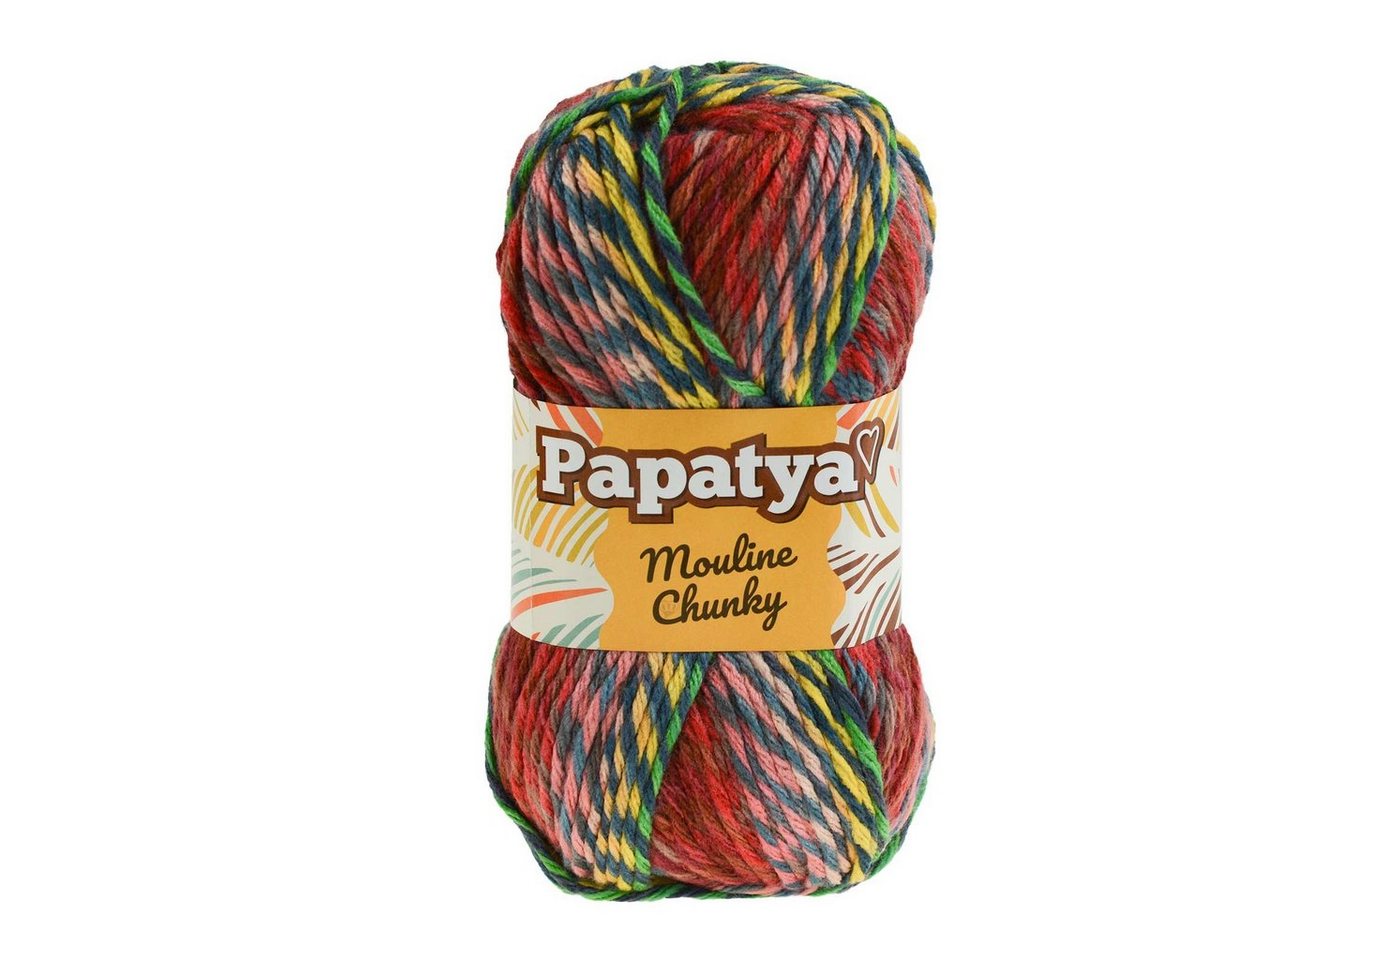 Papatya 100g Strickgarn Papatya Mouline Chunky Strickwolle mehrfarbig Effektgarn, 160 m, 5772 mehrfarbig von Papatya